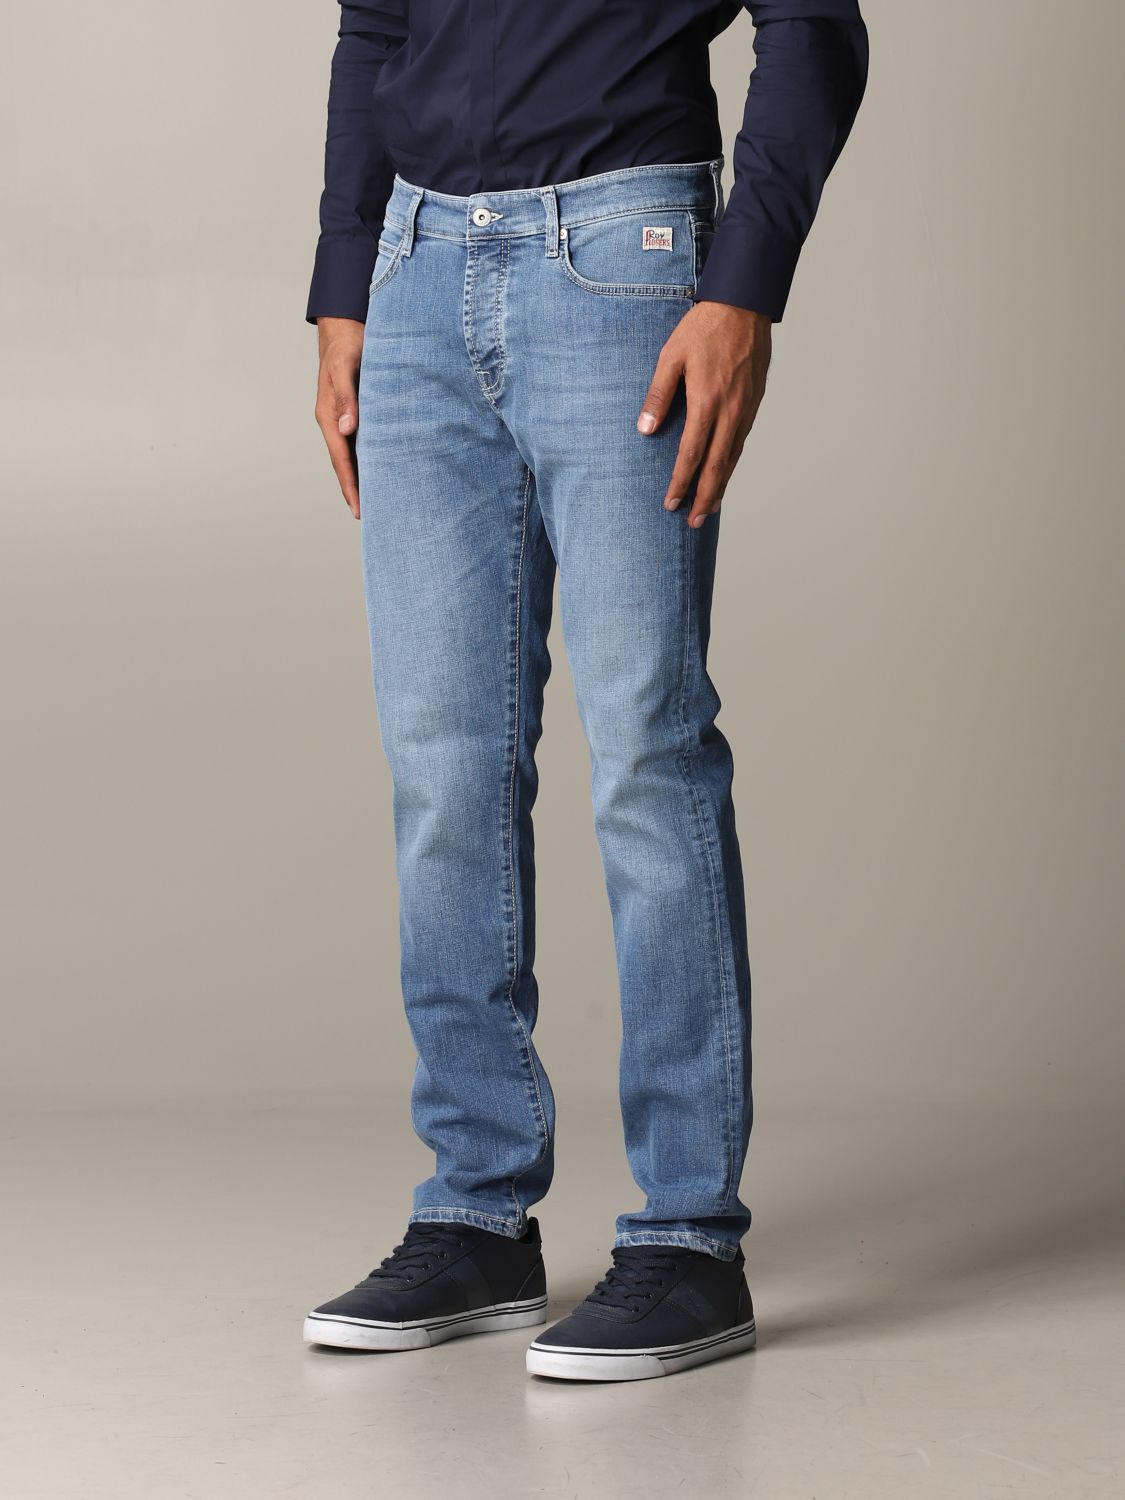 Roy Rogers Outlet: 5-pocket jeans - Denim | Roy Rogers jeans  P20RRU000D0210098C8 online on 